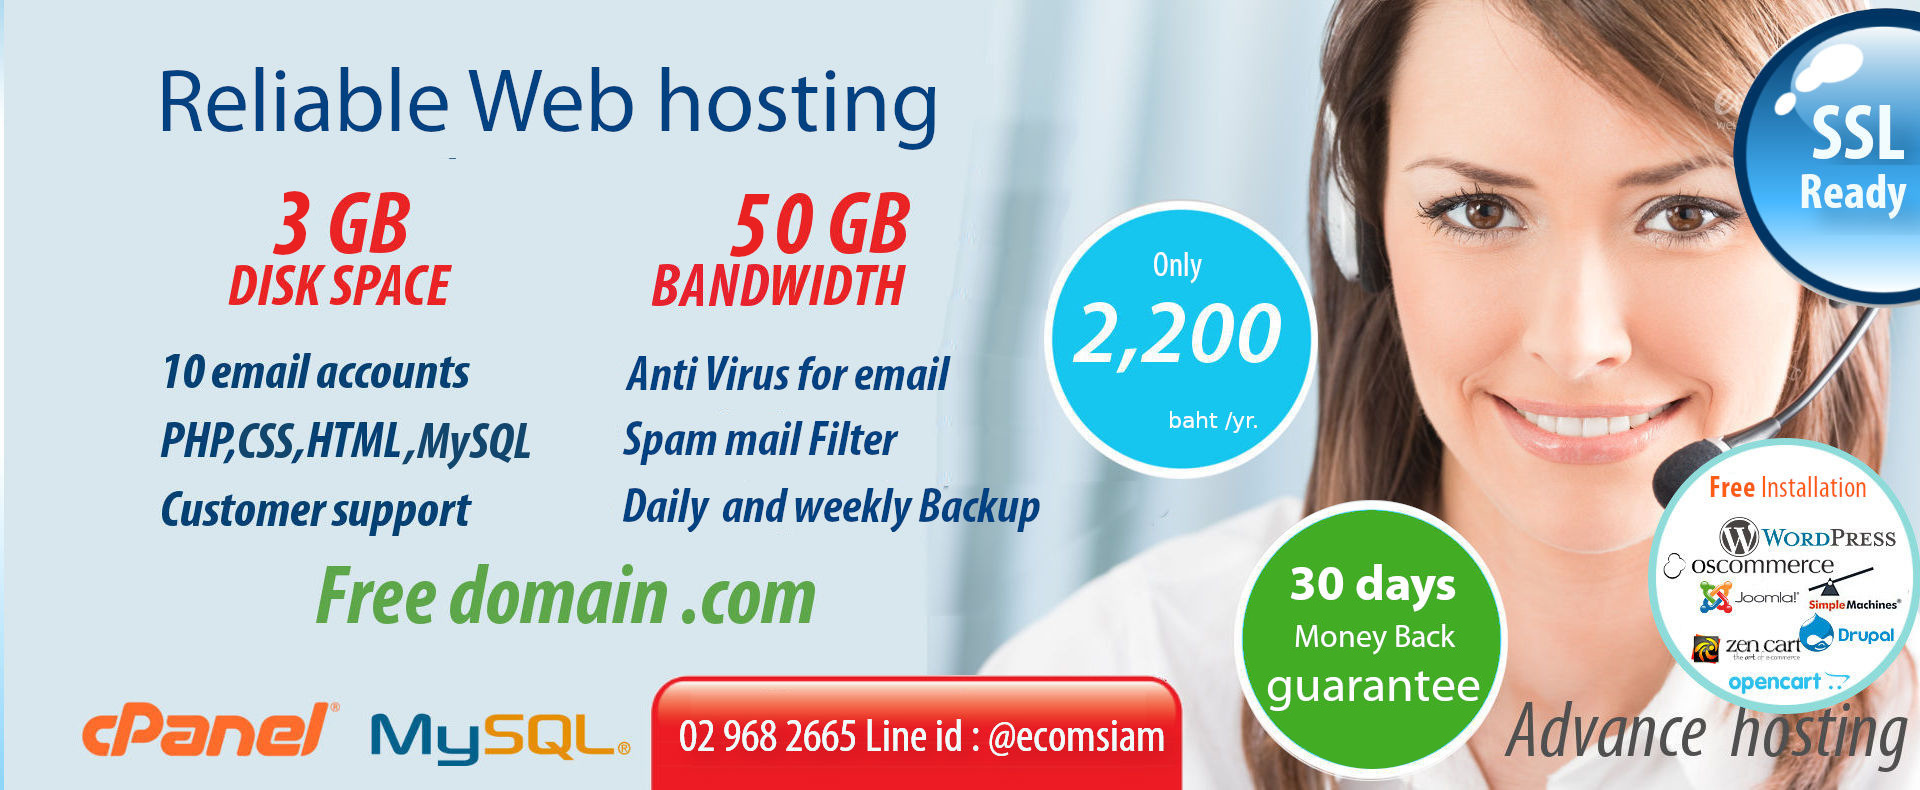 Advance web hosting thailand บริการเว็บโฮสติ้ง ฟรีโดเมน ฟรี SSL -แนะนำ  web hosting thailand -เว็บโฮสติ้ง ฟรีโดเมน ฟรี SSL - web hosting thailand free domain -Advance web hosting สำหรับองค์กร บริการลูกค้า ดูแลดี 